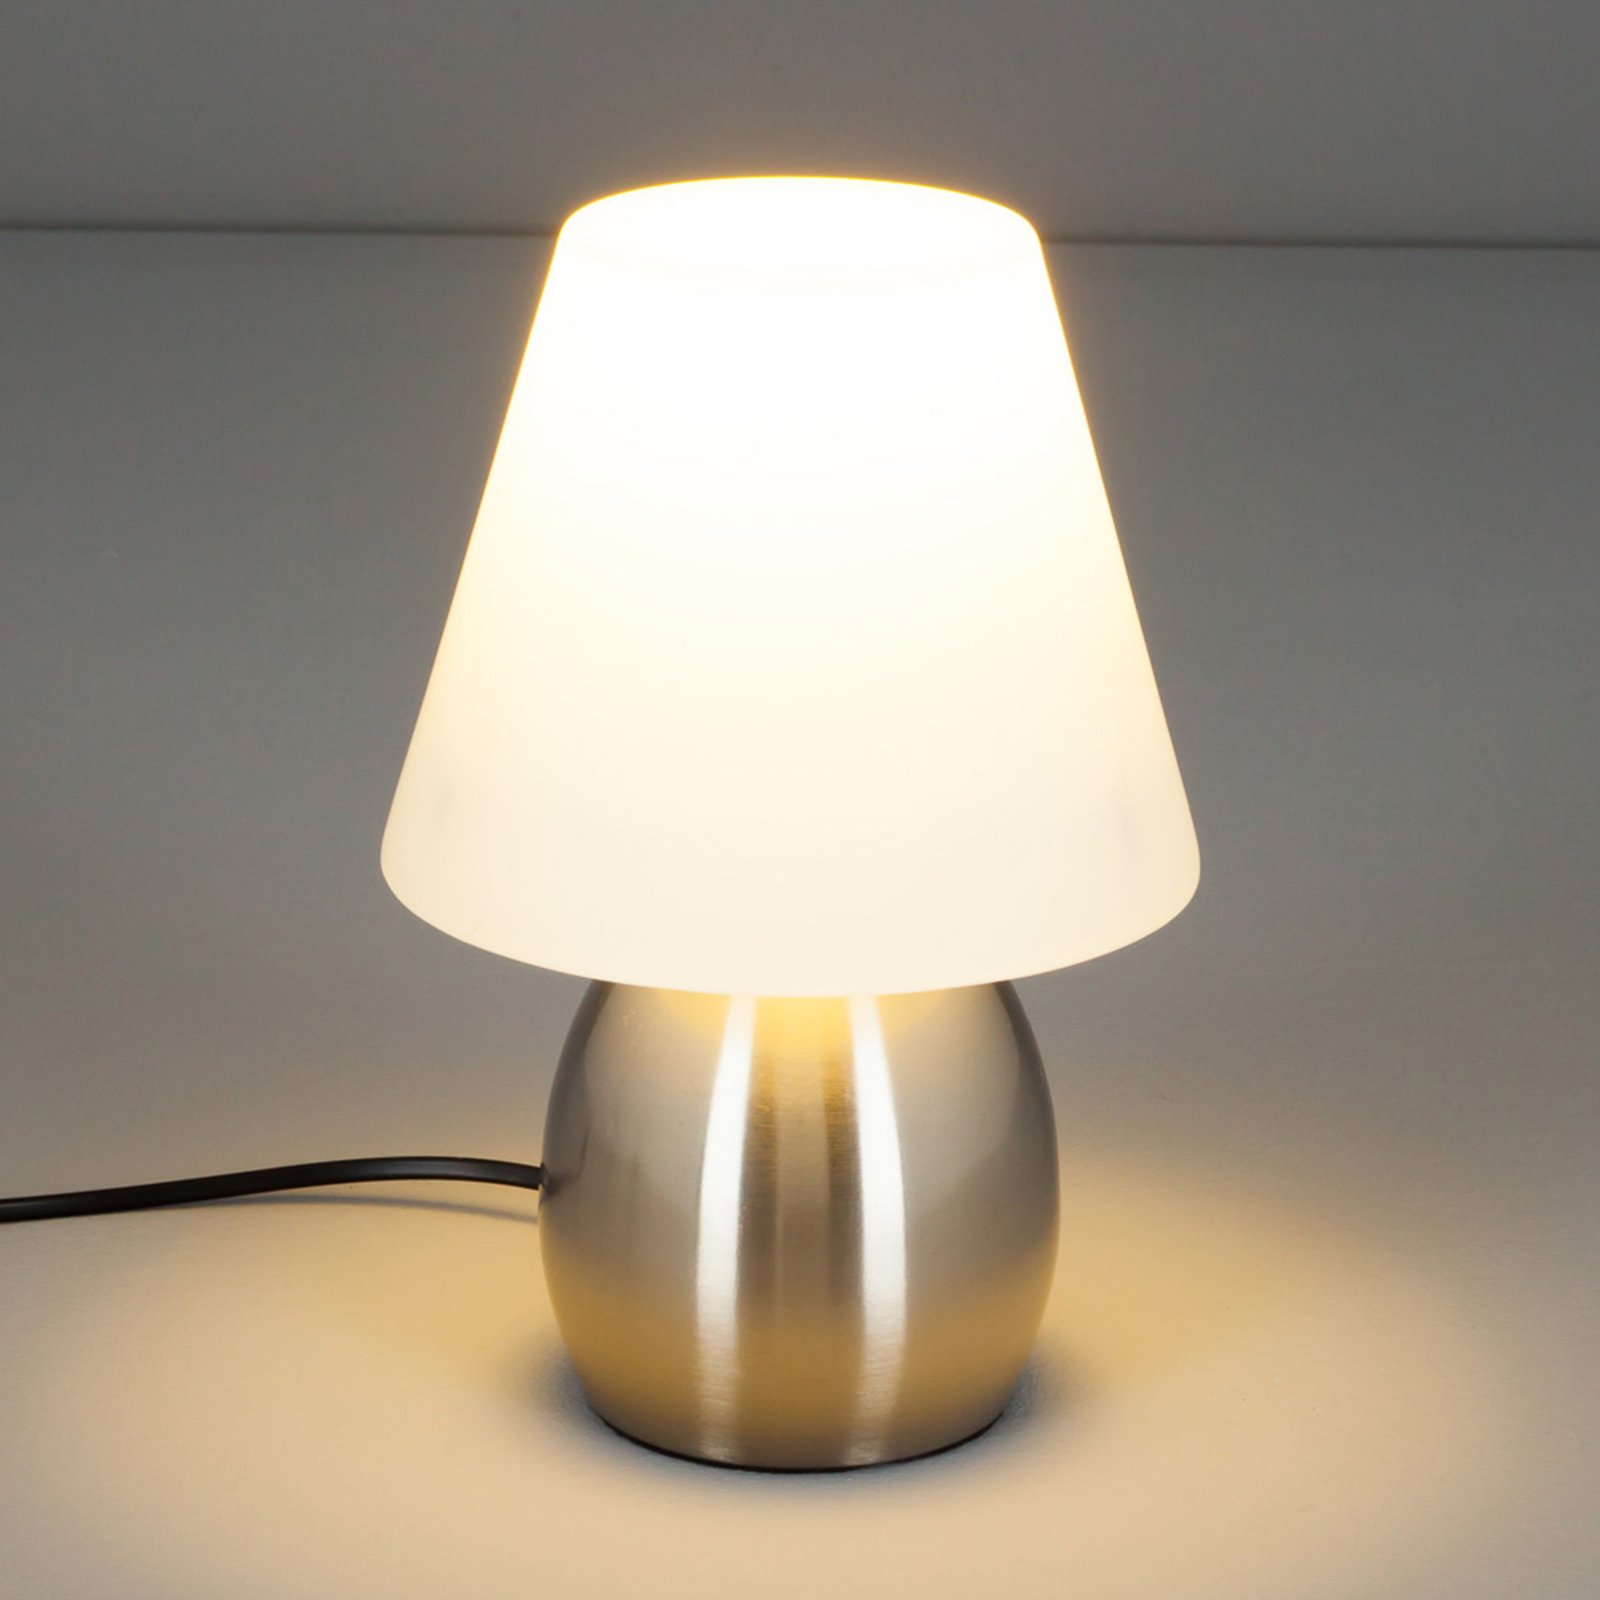 Tischlampe Glas Nachttischlampe Dekolampe E14 Lampe Bedside Lamp Glaslampe rund 